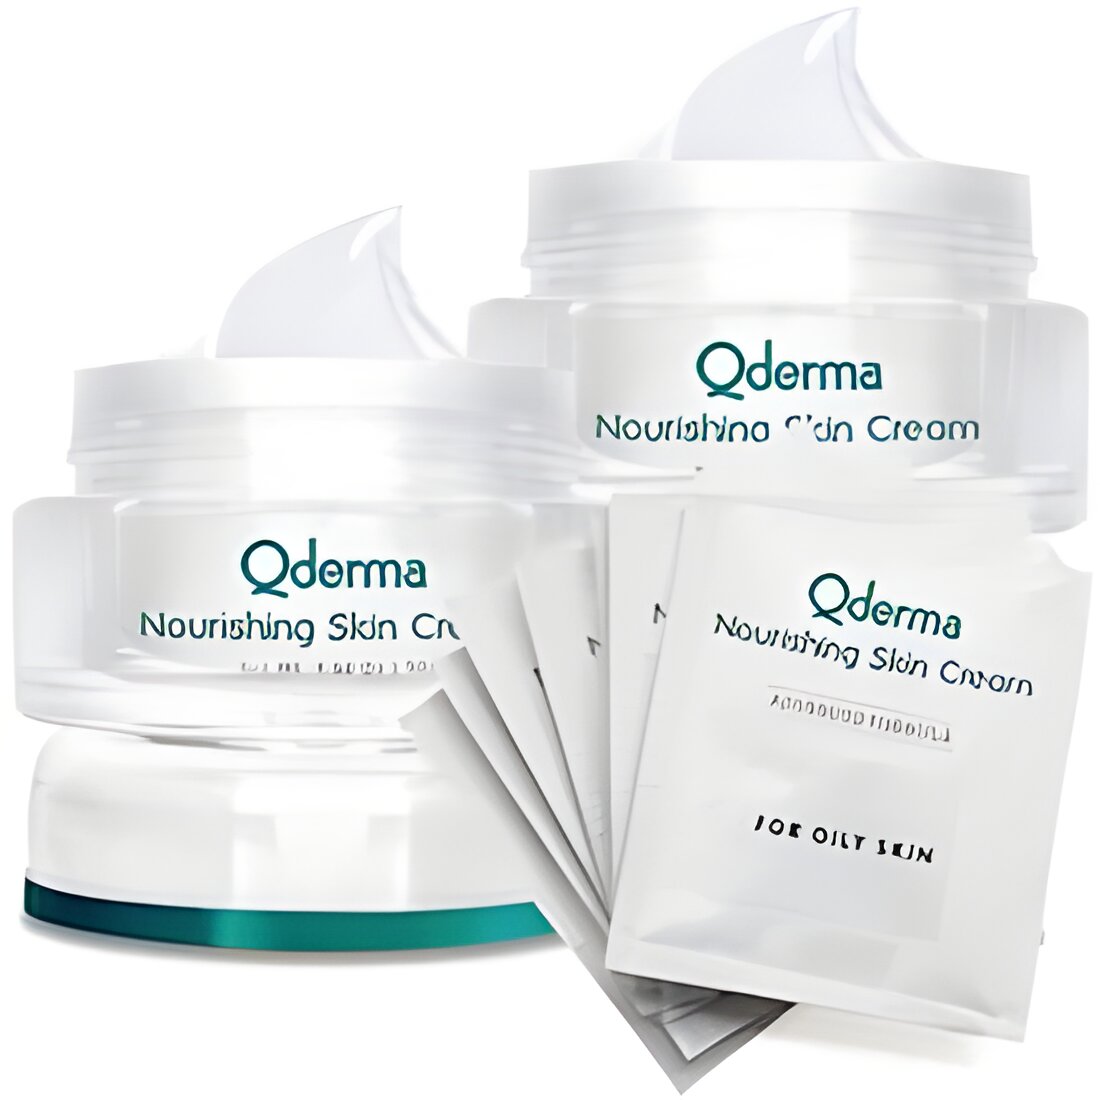 Free Qderma Nourishing Skin Cream